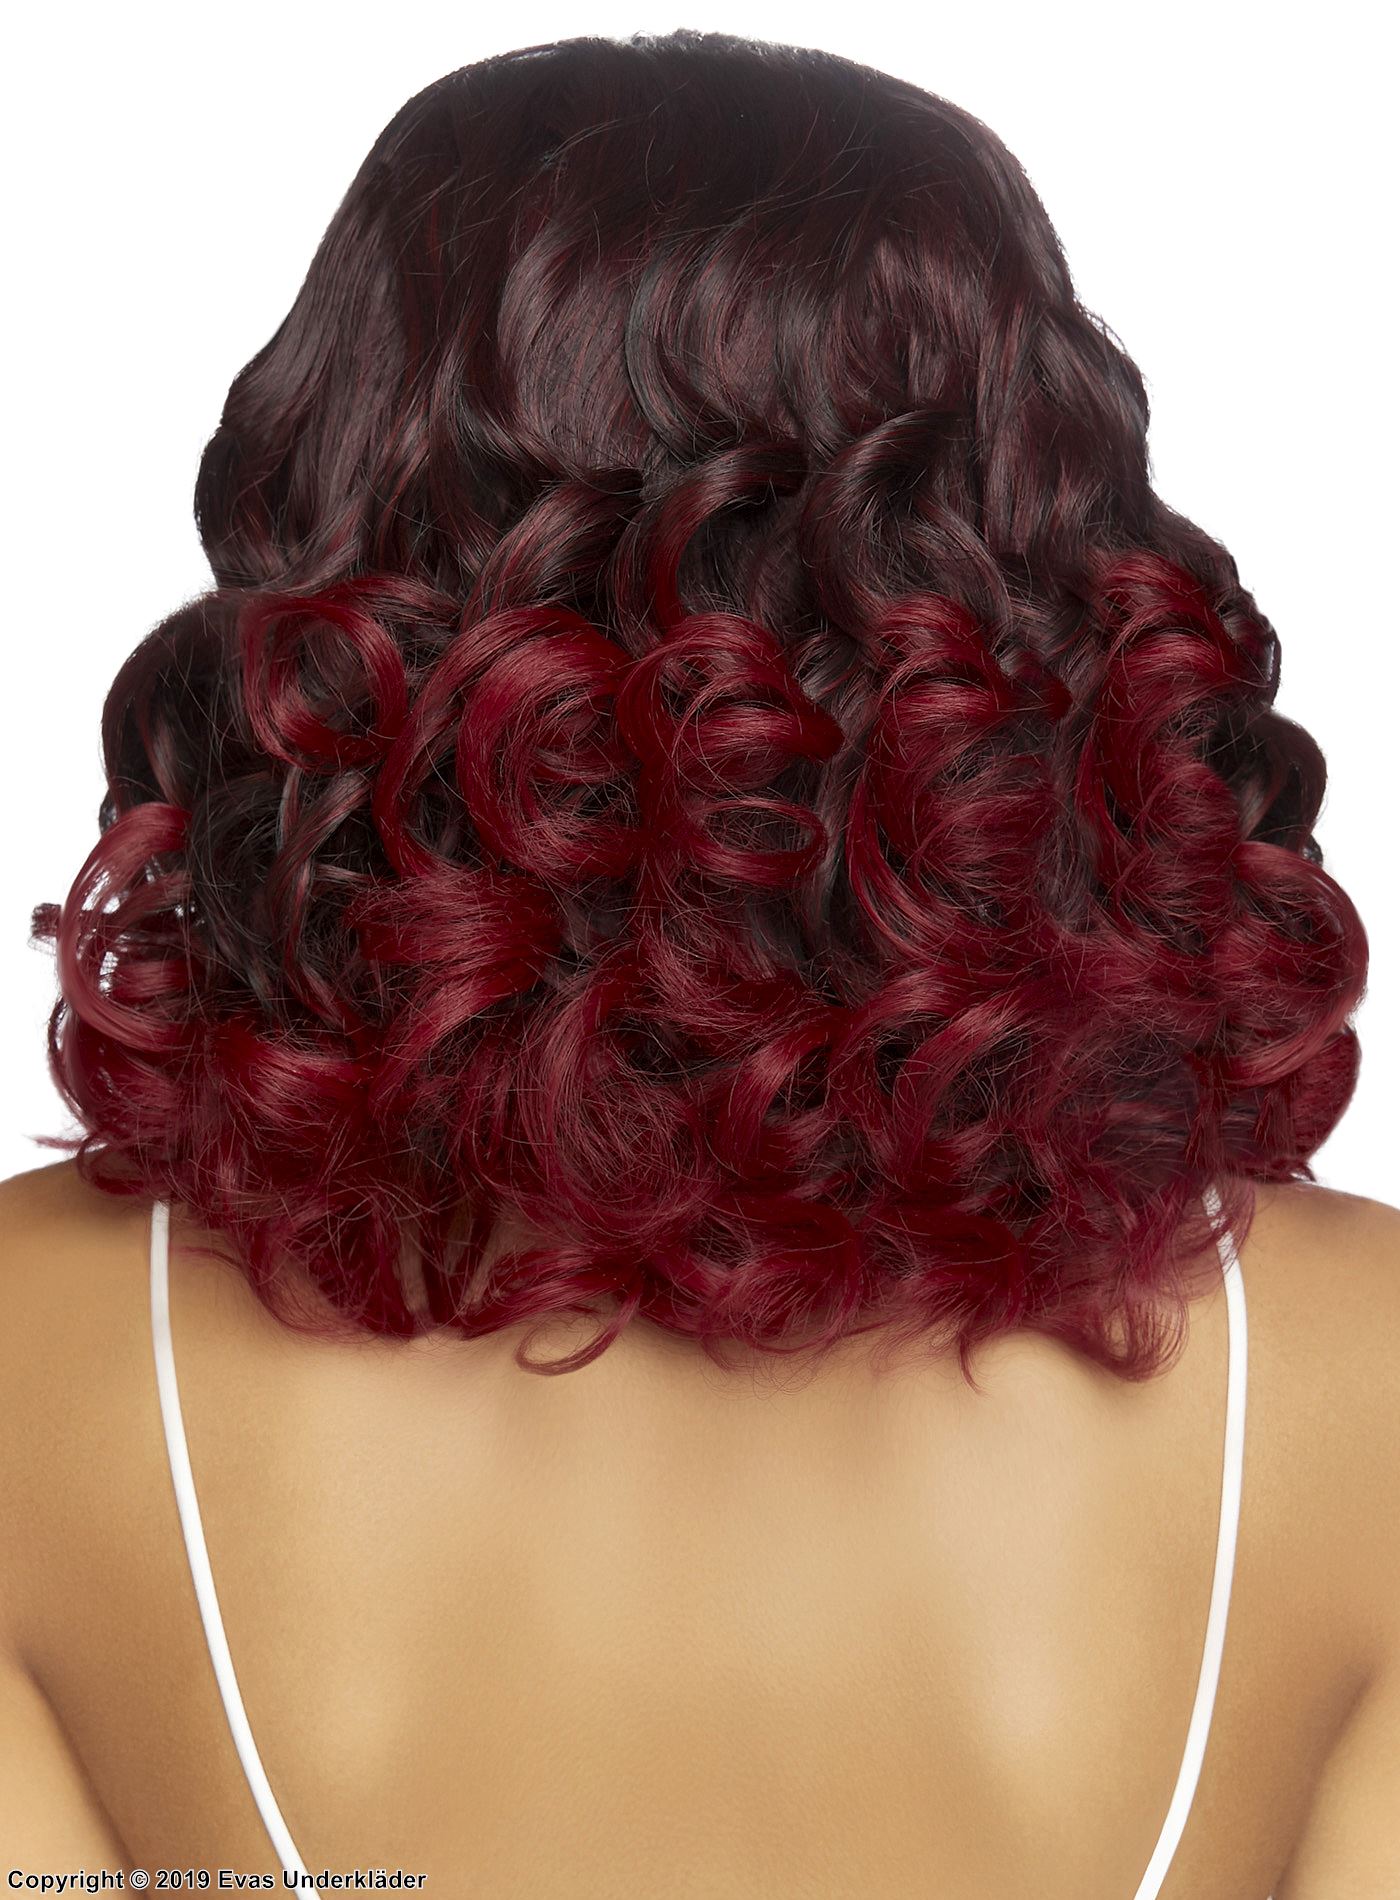 Wig, curls, center part, ombre